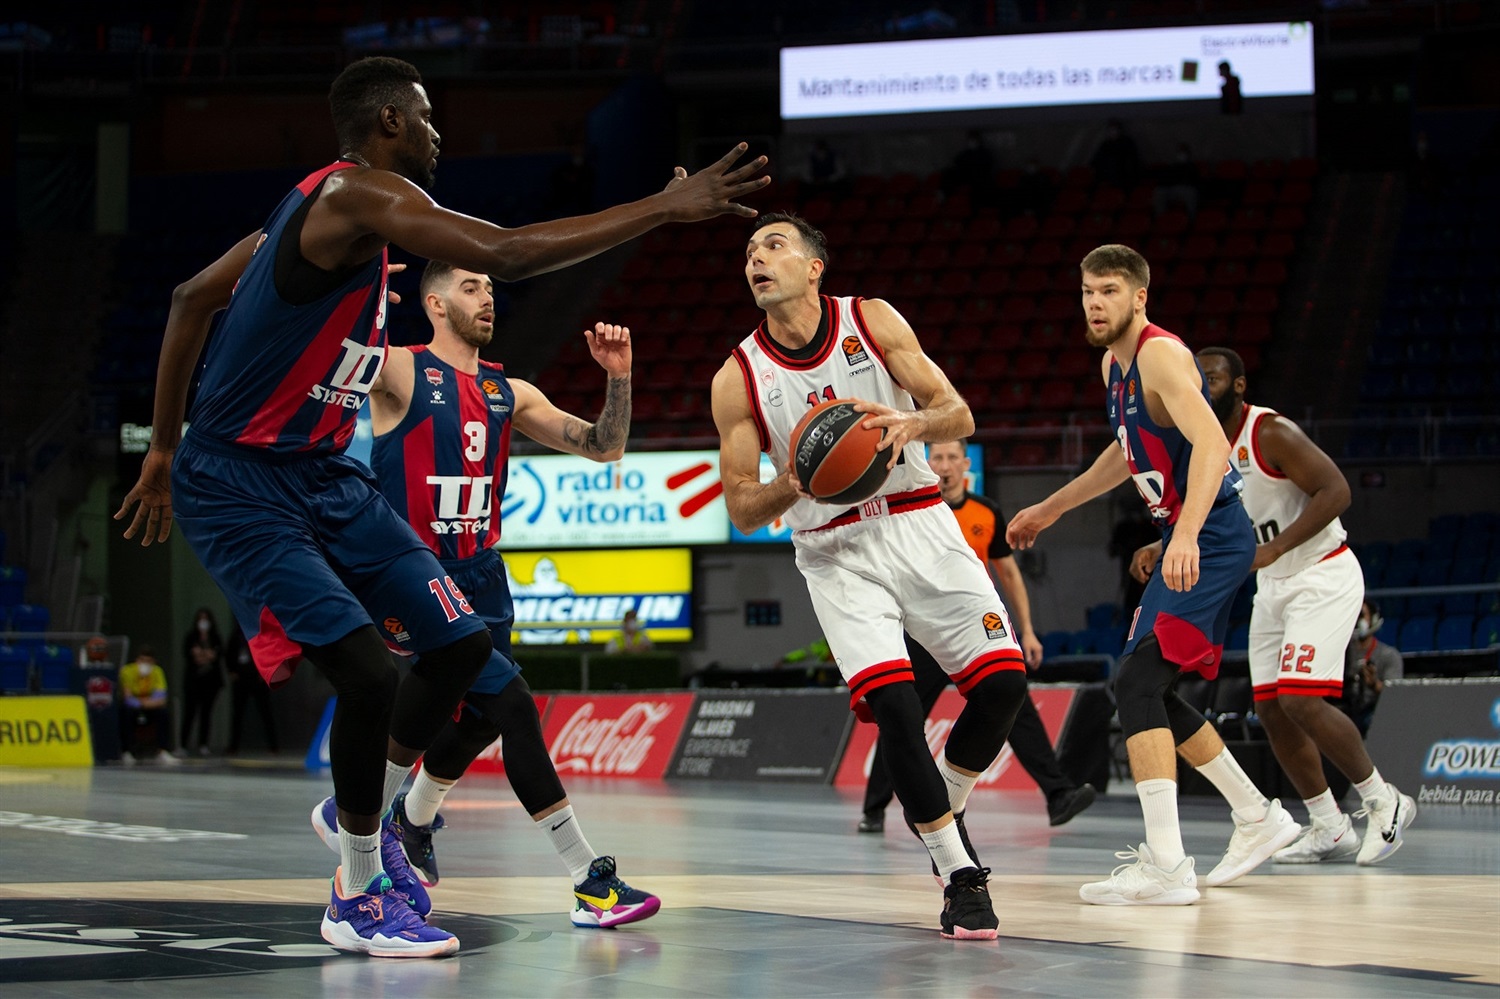 preocupación Descomponer Enojado Previa EuroLeague Jornada 1: Olympiacos vs Baskonia - Piratasdelbasket